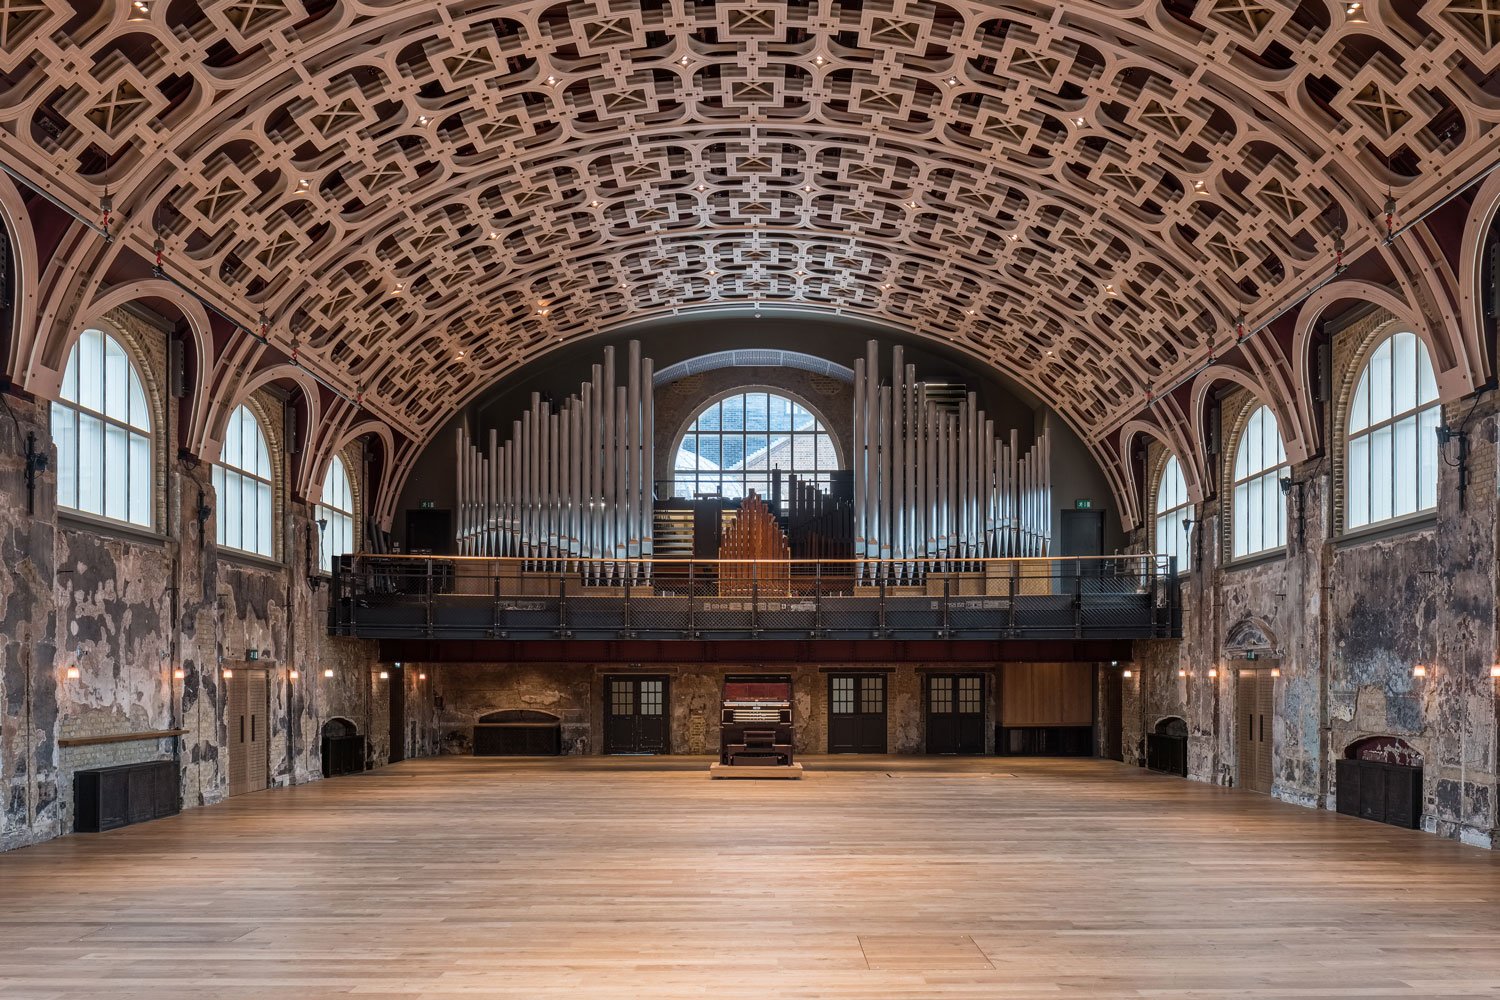 BAC Grand Hall - Organ View.jpg